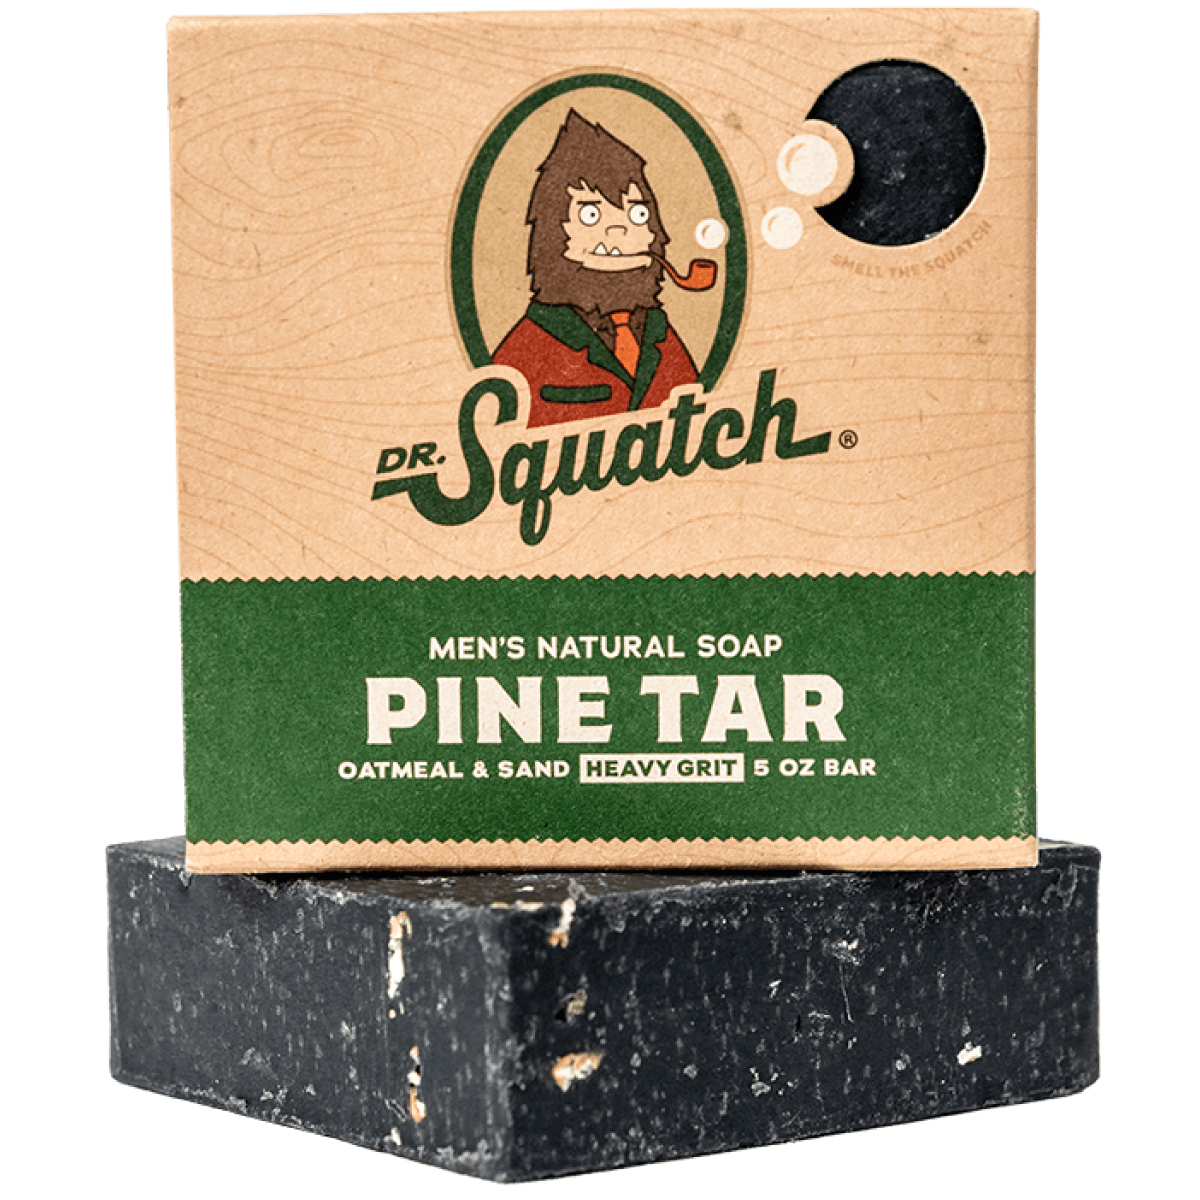 Dr. Squatch Pine Tar Lotion